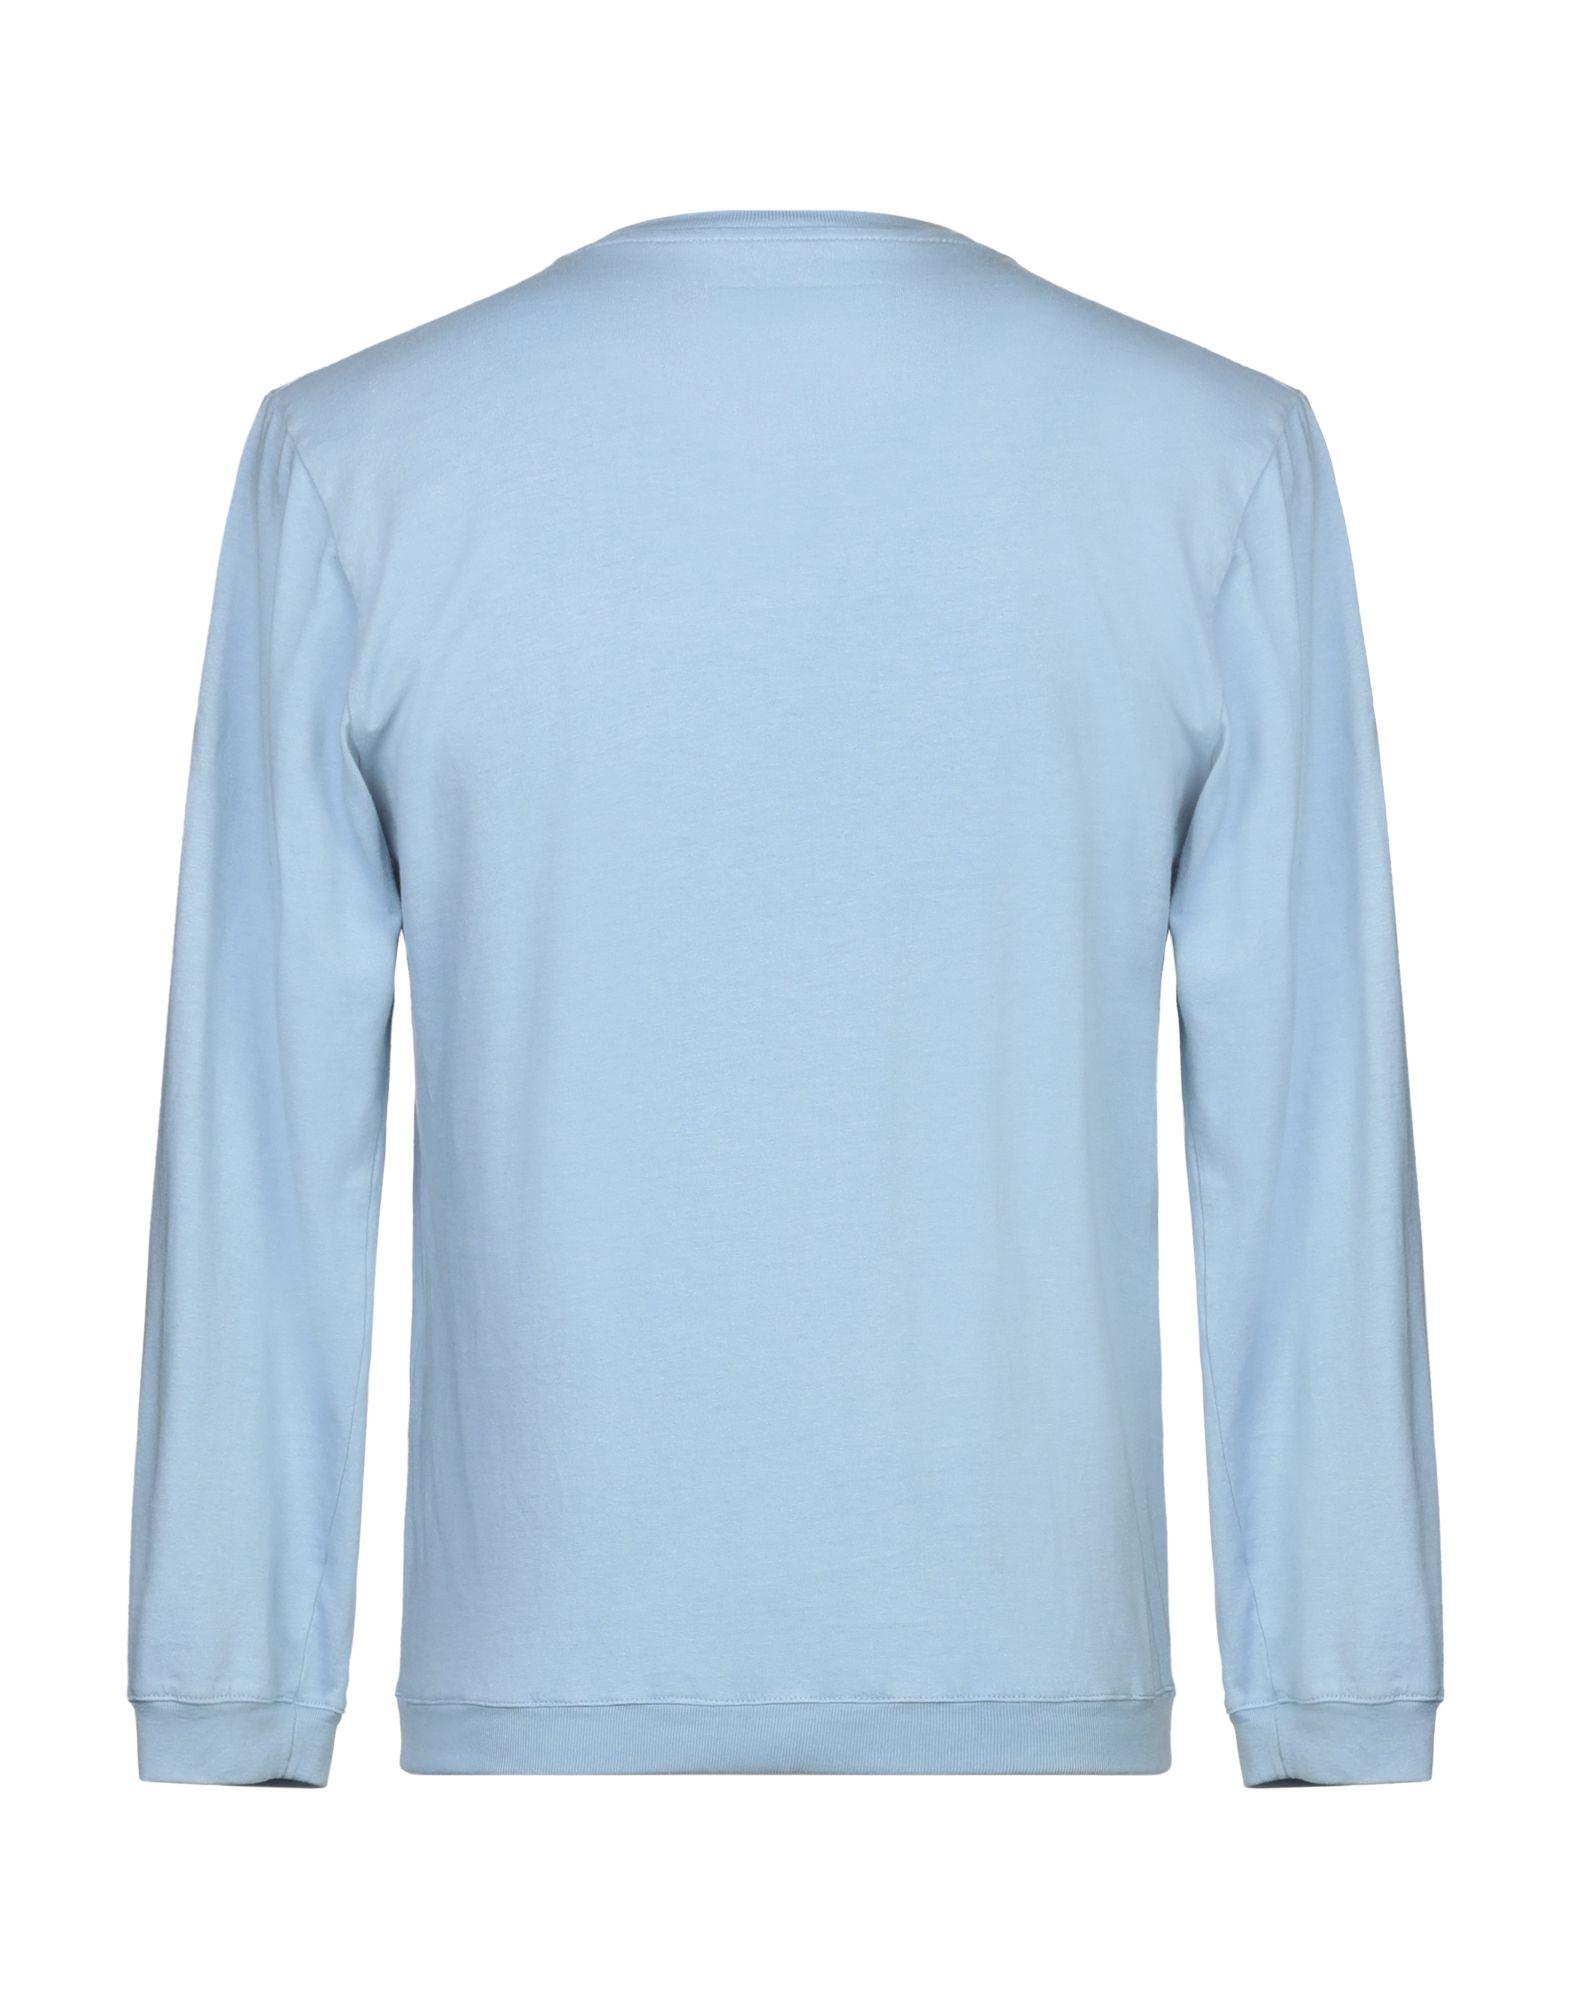 Department 5 Cotton T-shirt in Sky Blue (Blue) for Men - Lyst